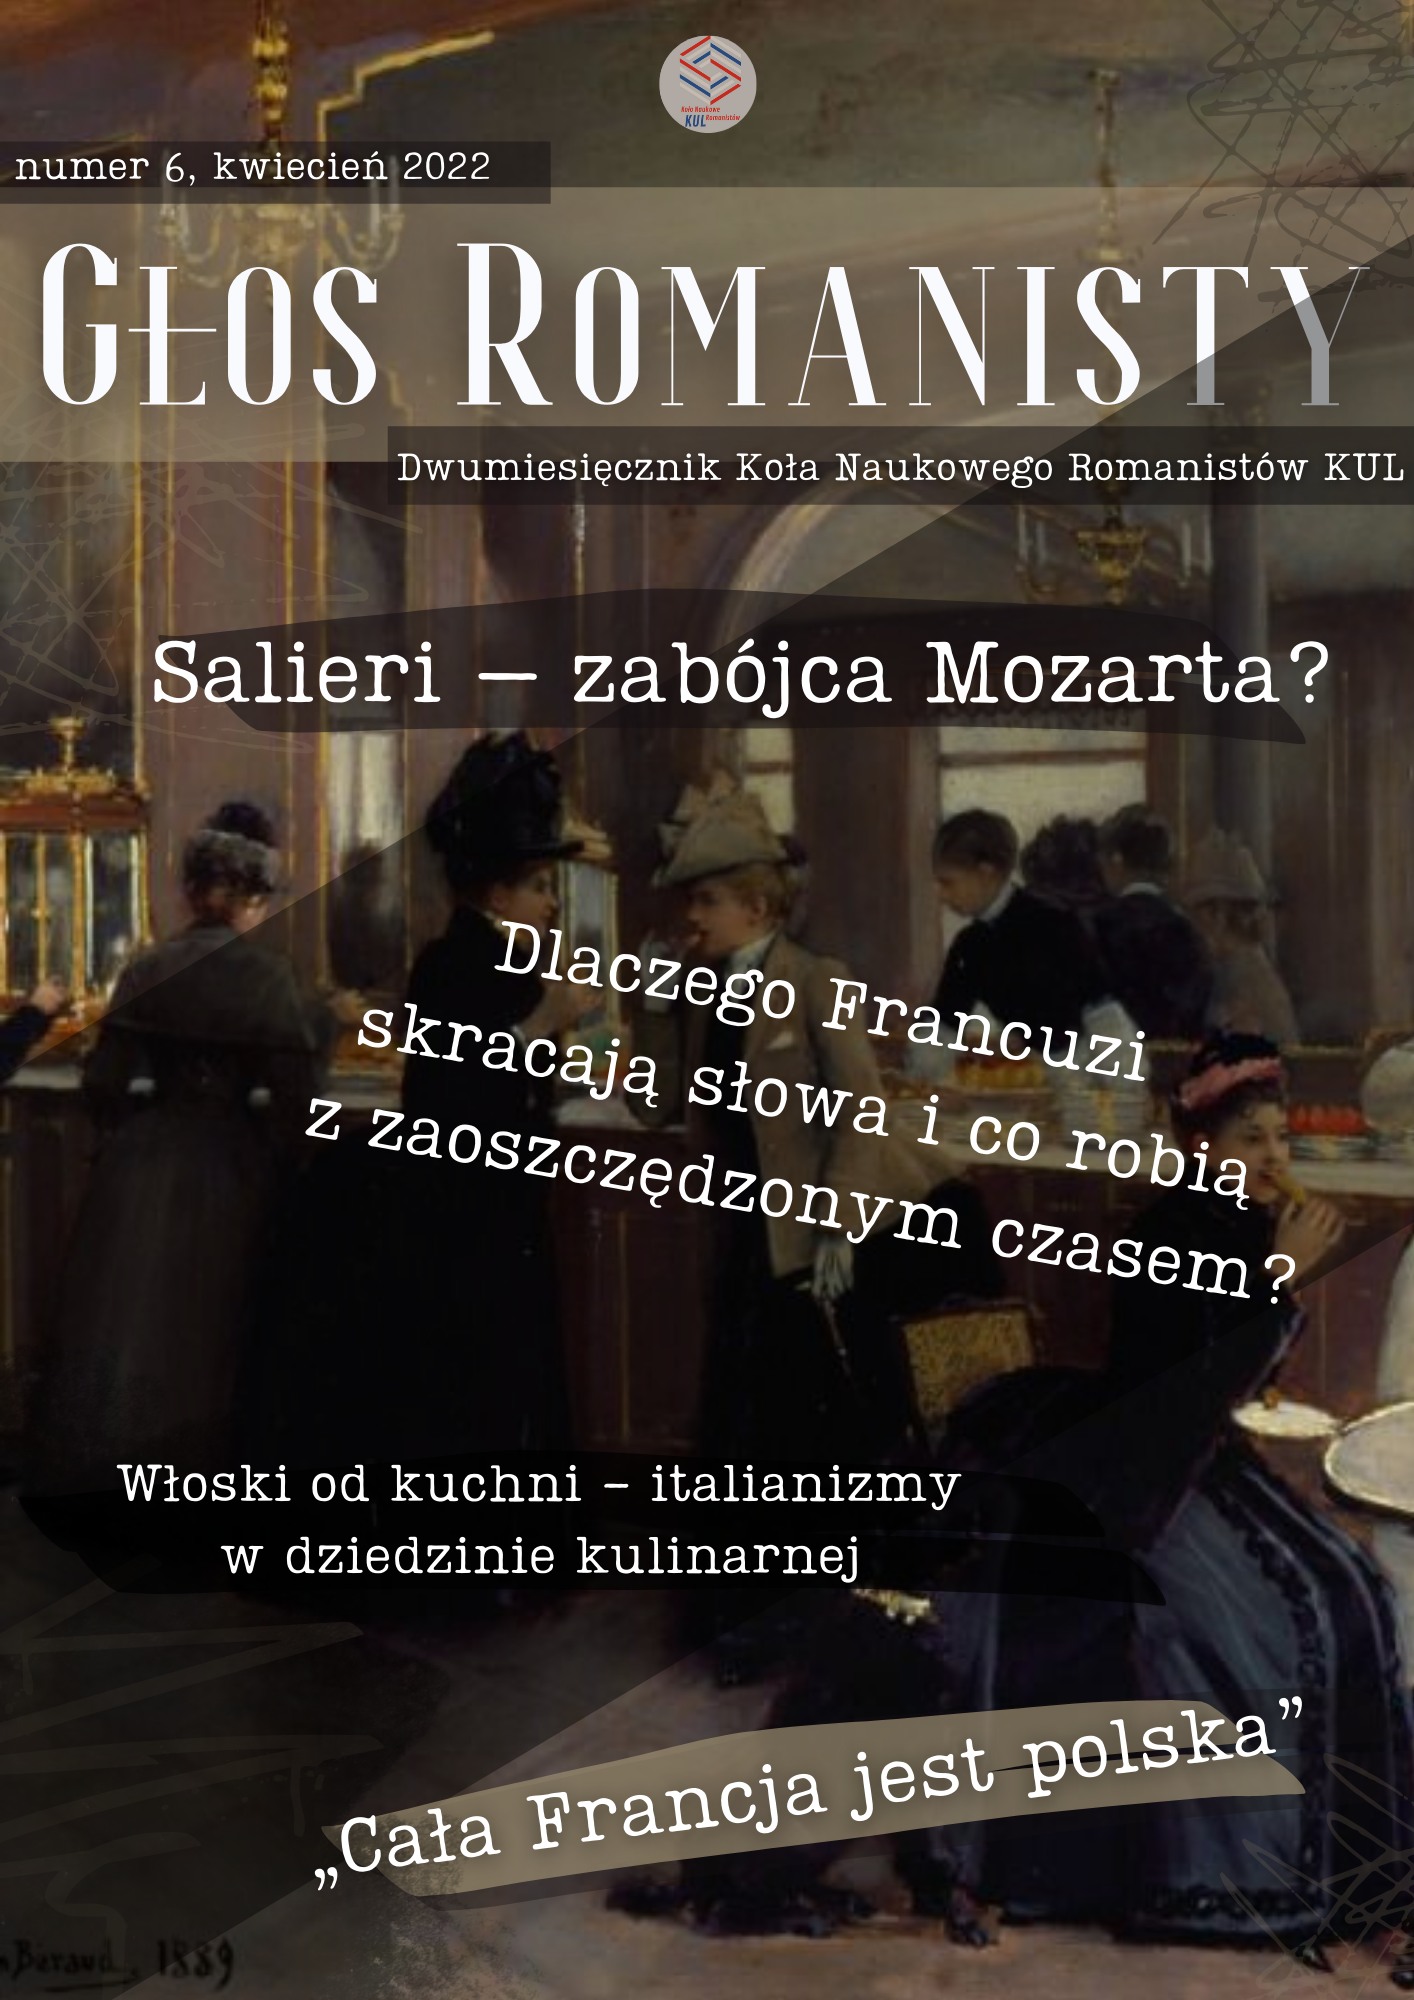 glos_romanisty_6